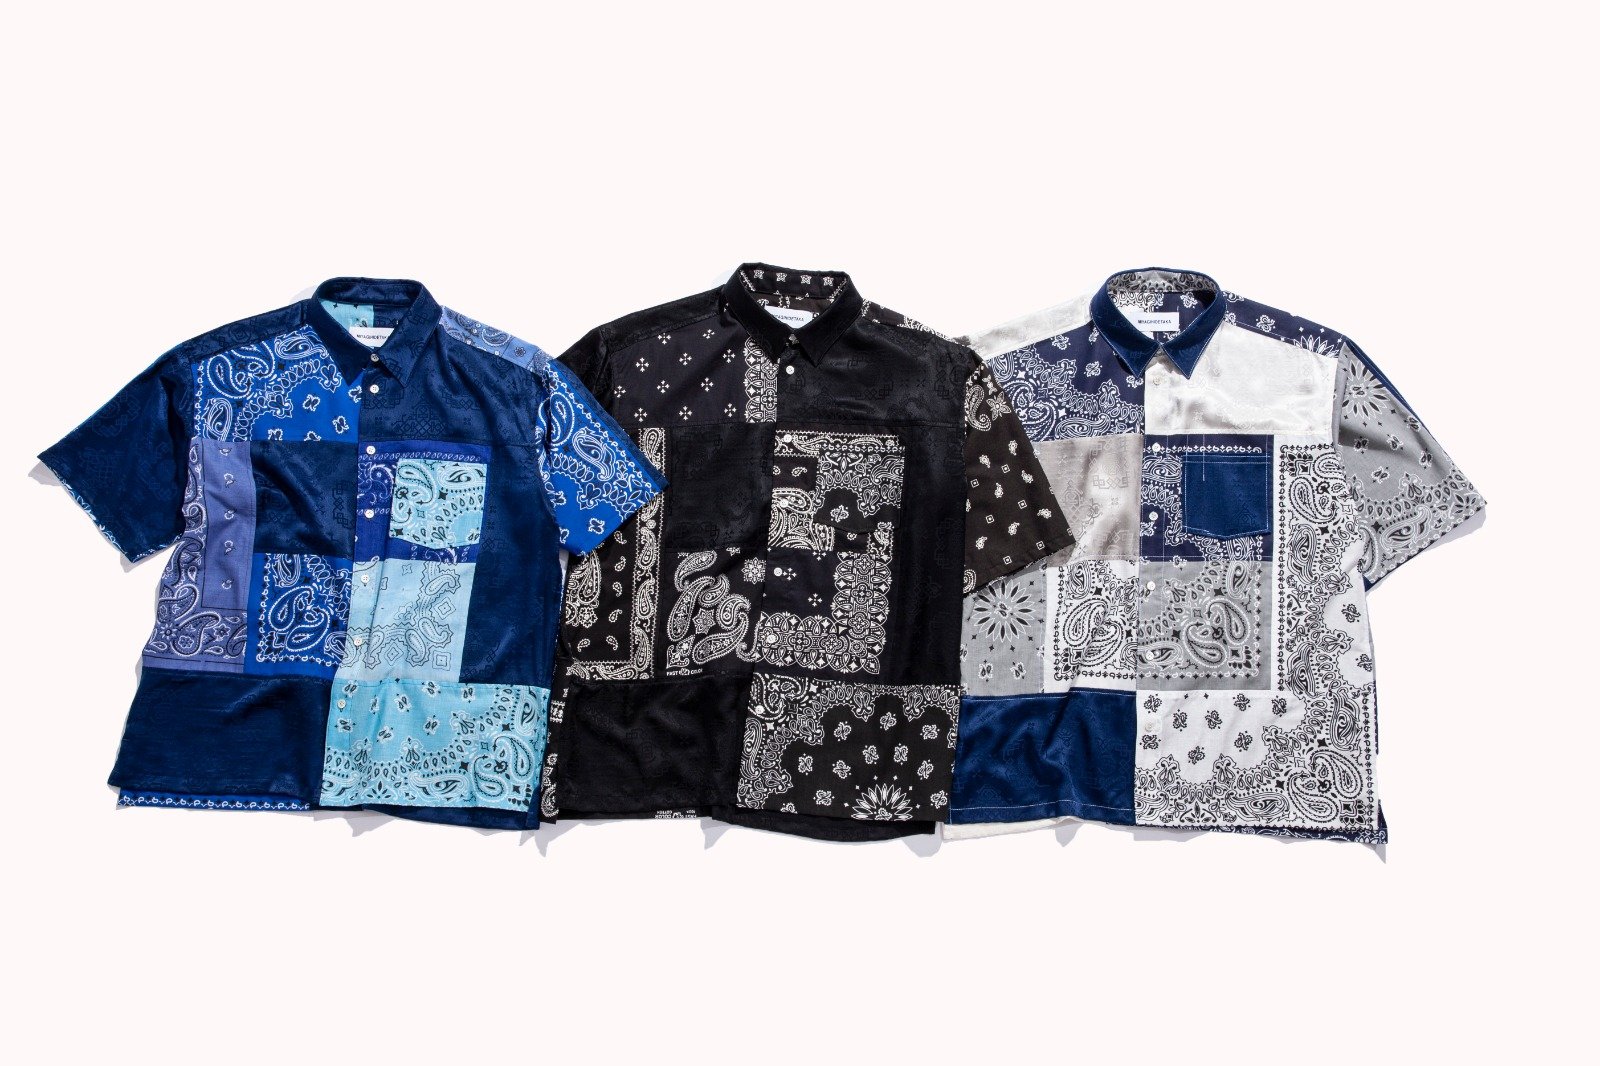 CLOT x MIYAGIHIDETAKA 2020 Shirt Collection